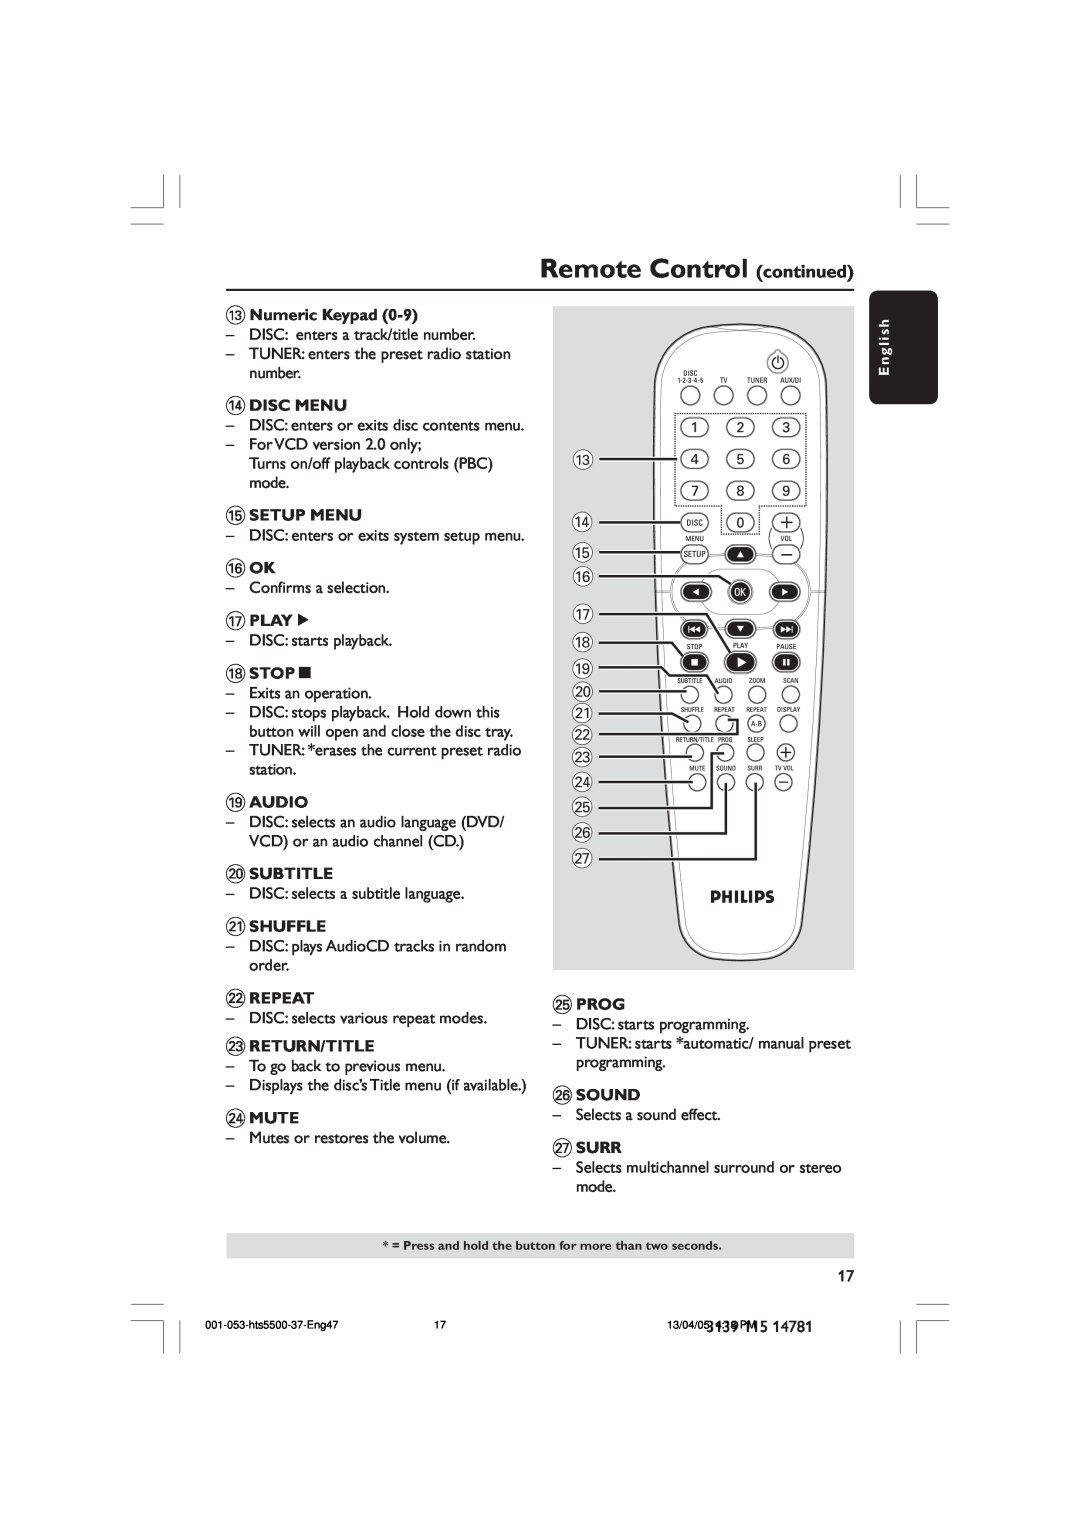 Philips HTS5500C/37B Remote Control continued, # $ % & ¡ £ ≤ ∞ § ≥, #Numeric Keypad, $Disc Menu, Setup Menu, Playé, Stopç 